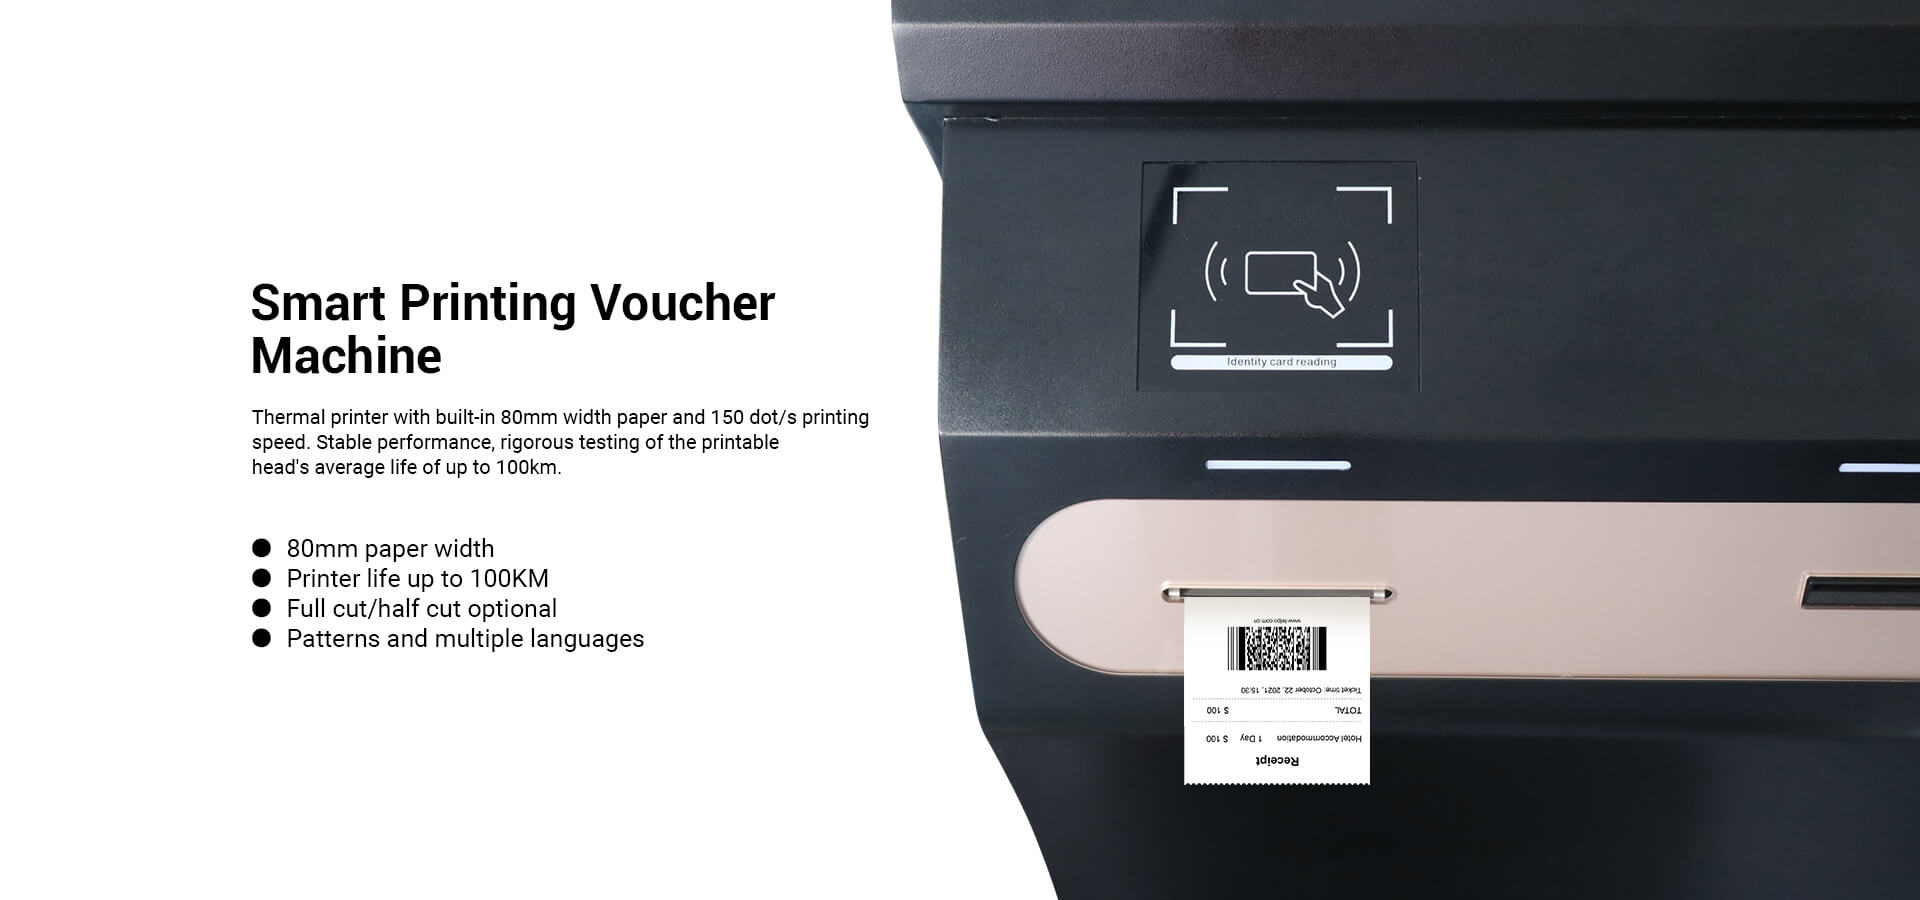 Smart printing voucher machine self checkin kiosk machine in hotel